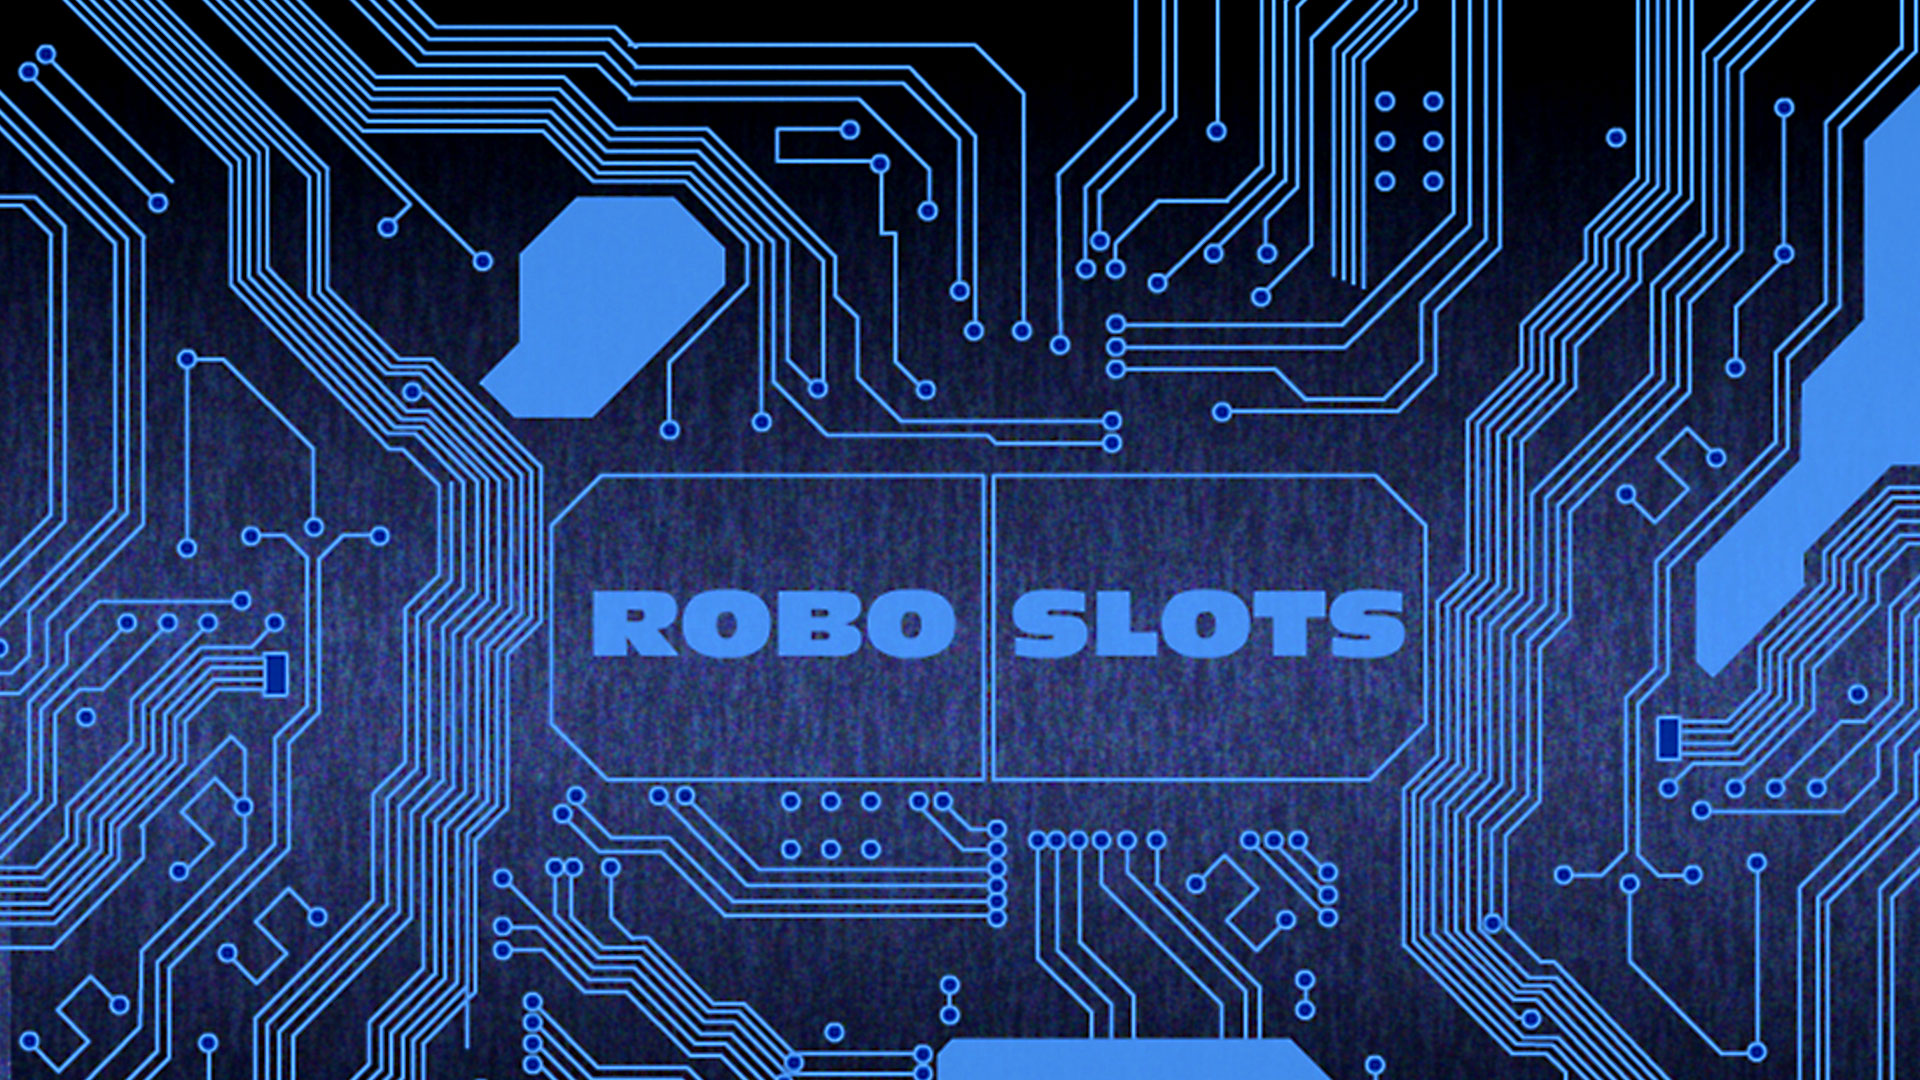 Game hight resolution background Roboslots